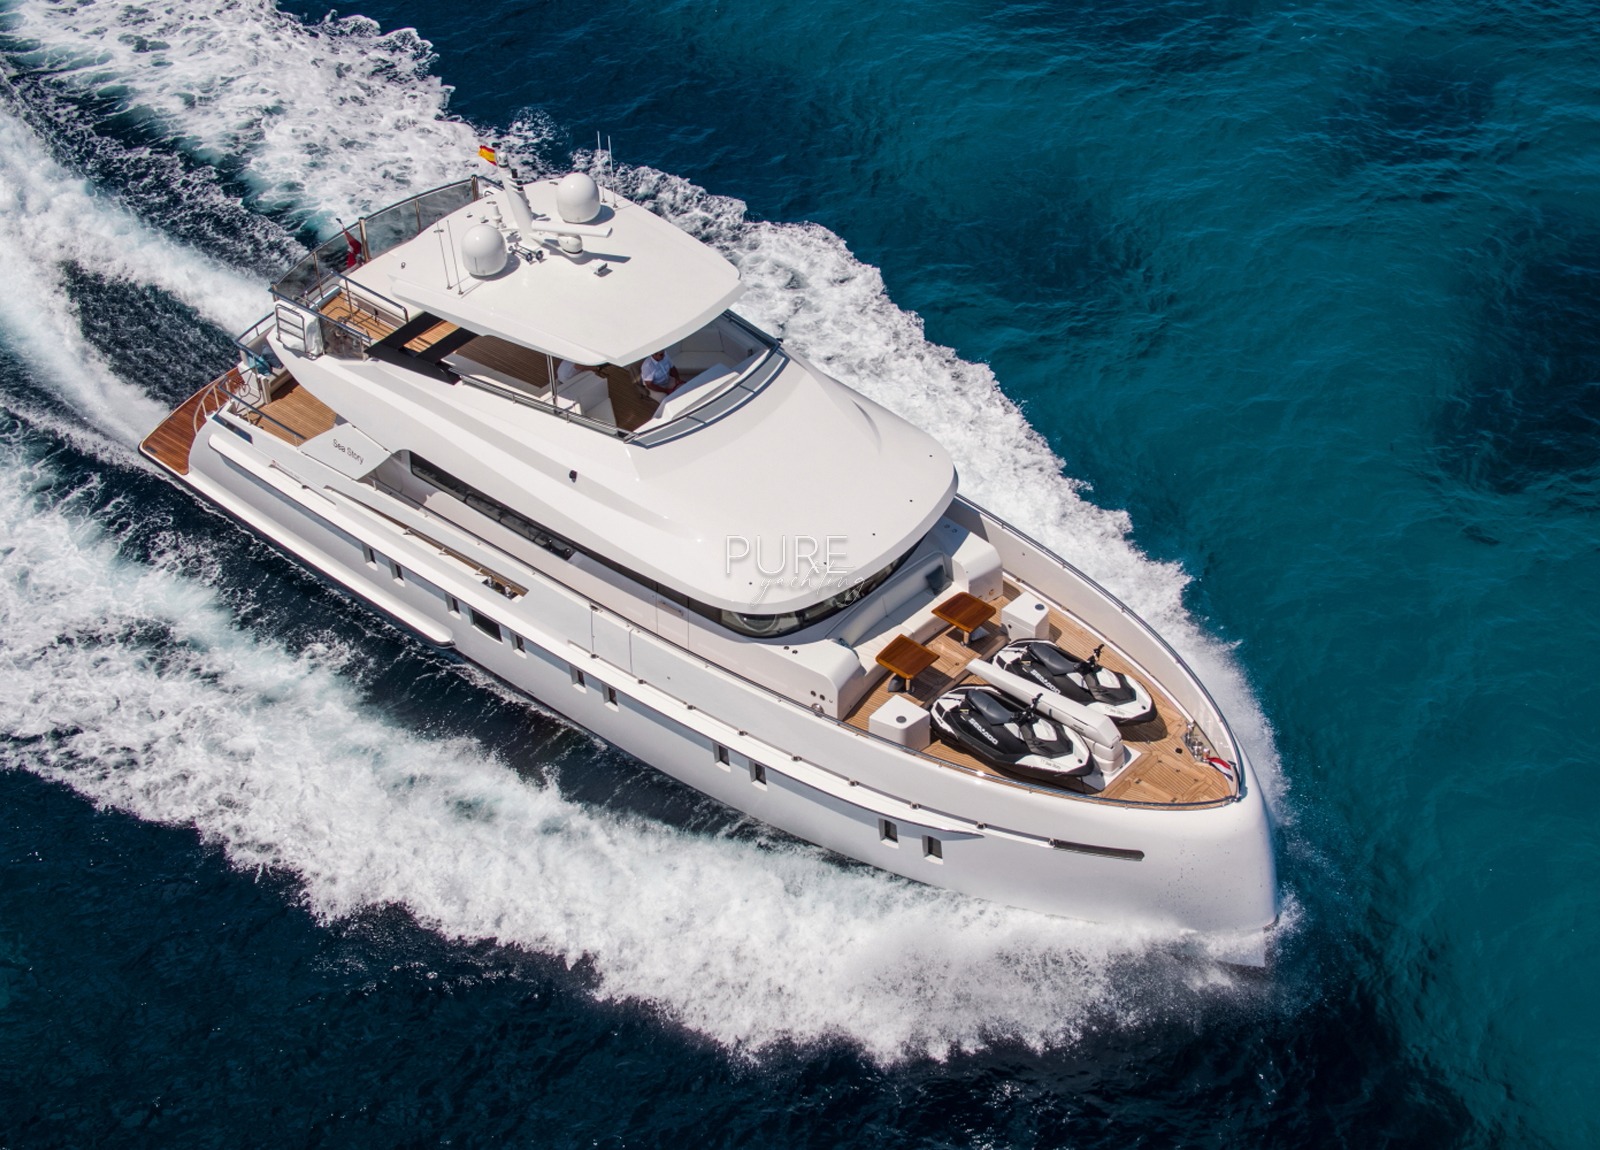 luxury yacht vanquish 82 sea story balearics charter